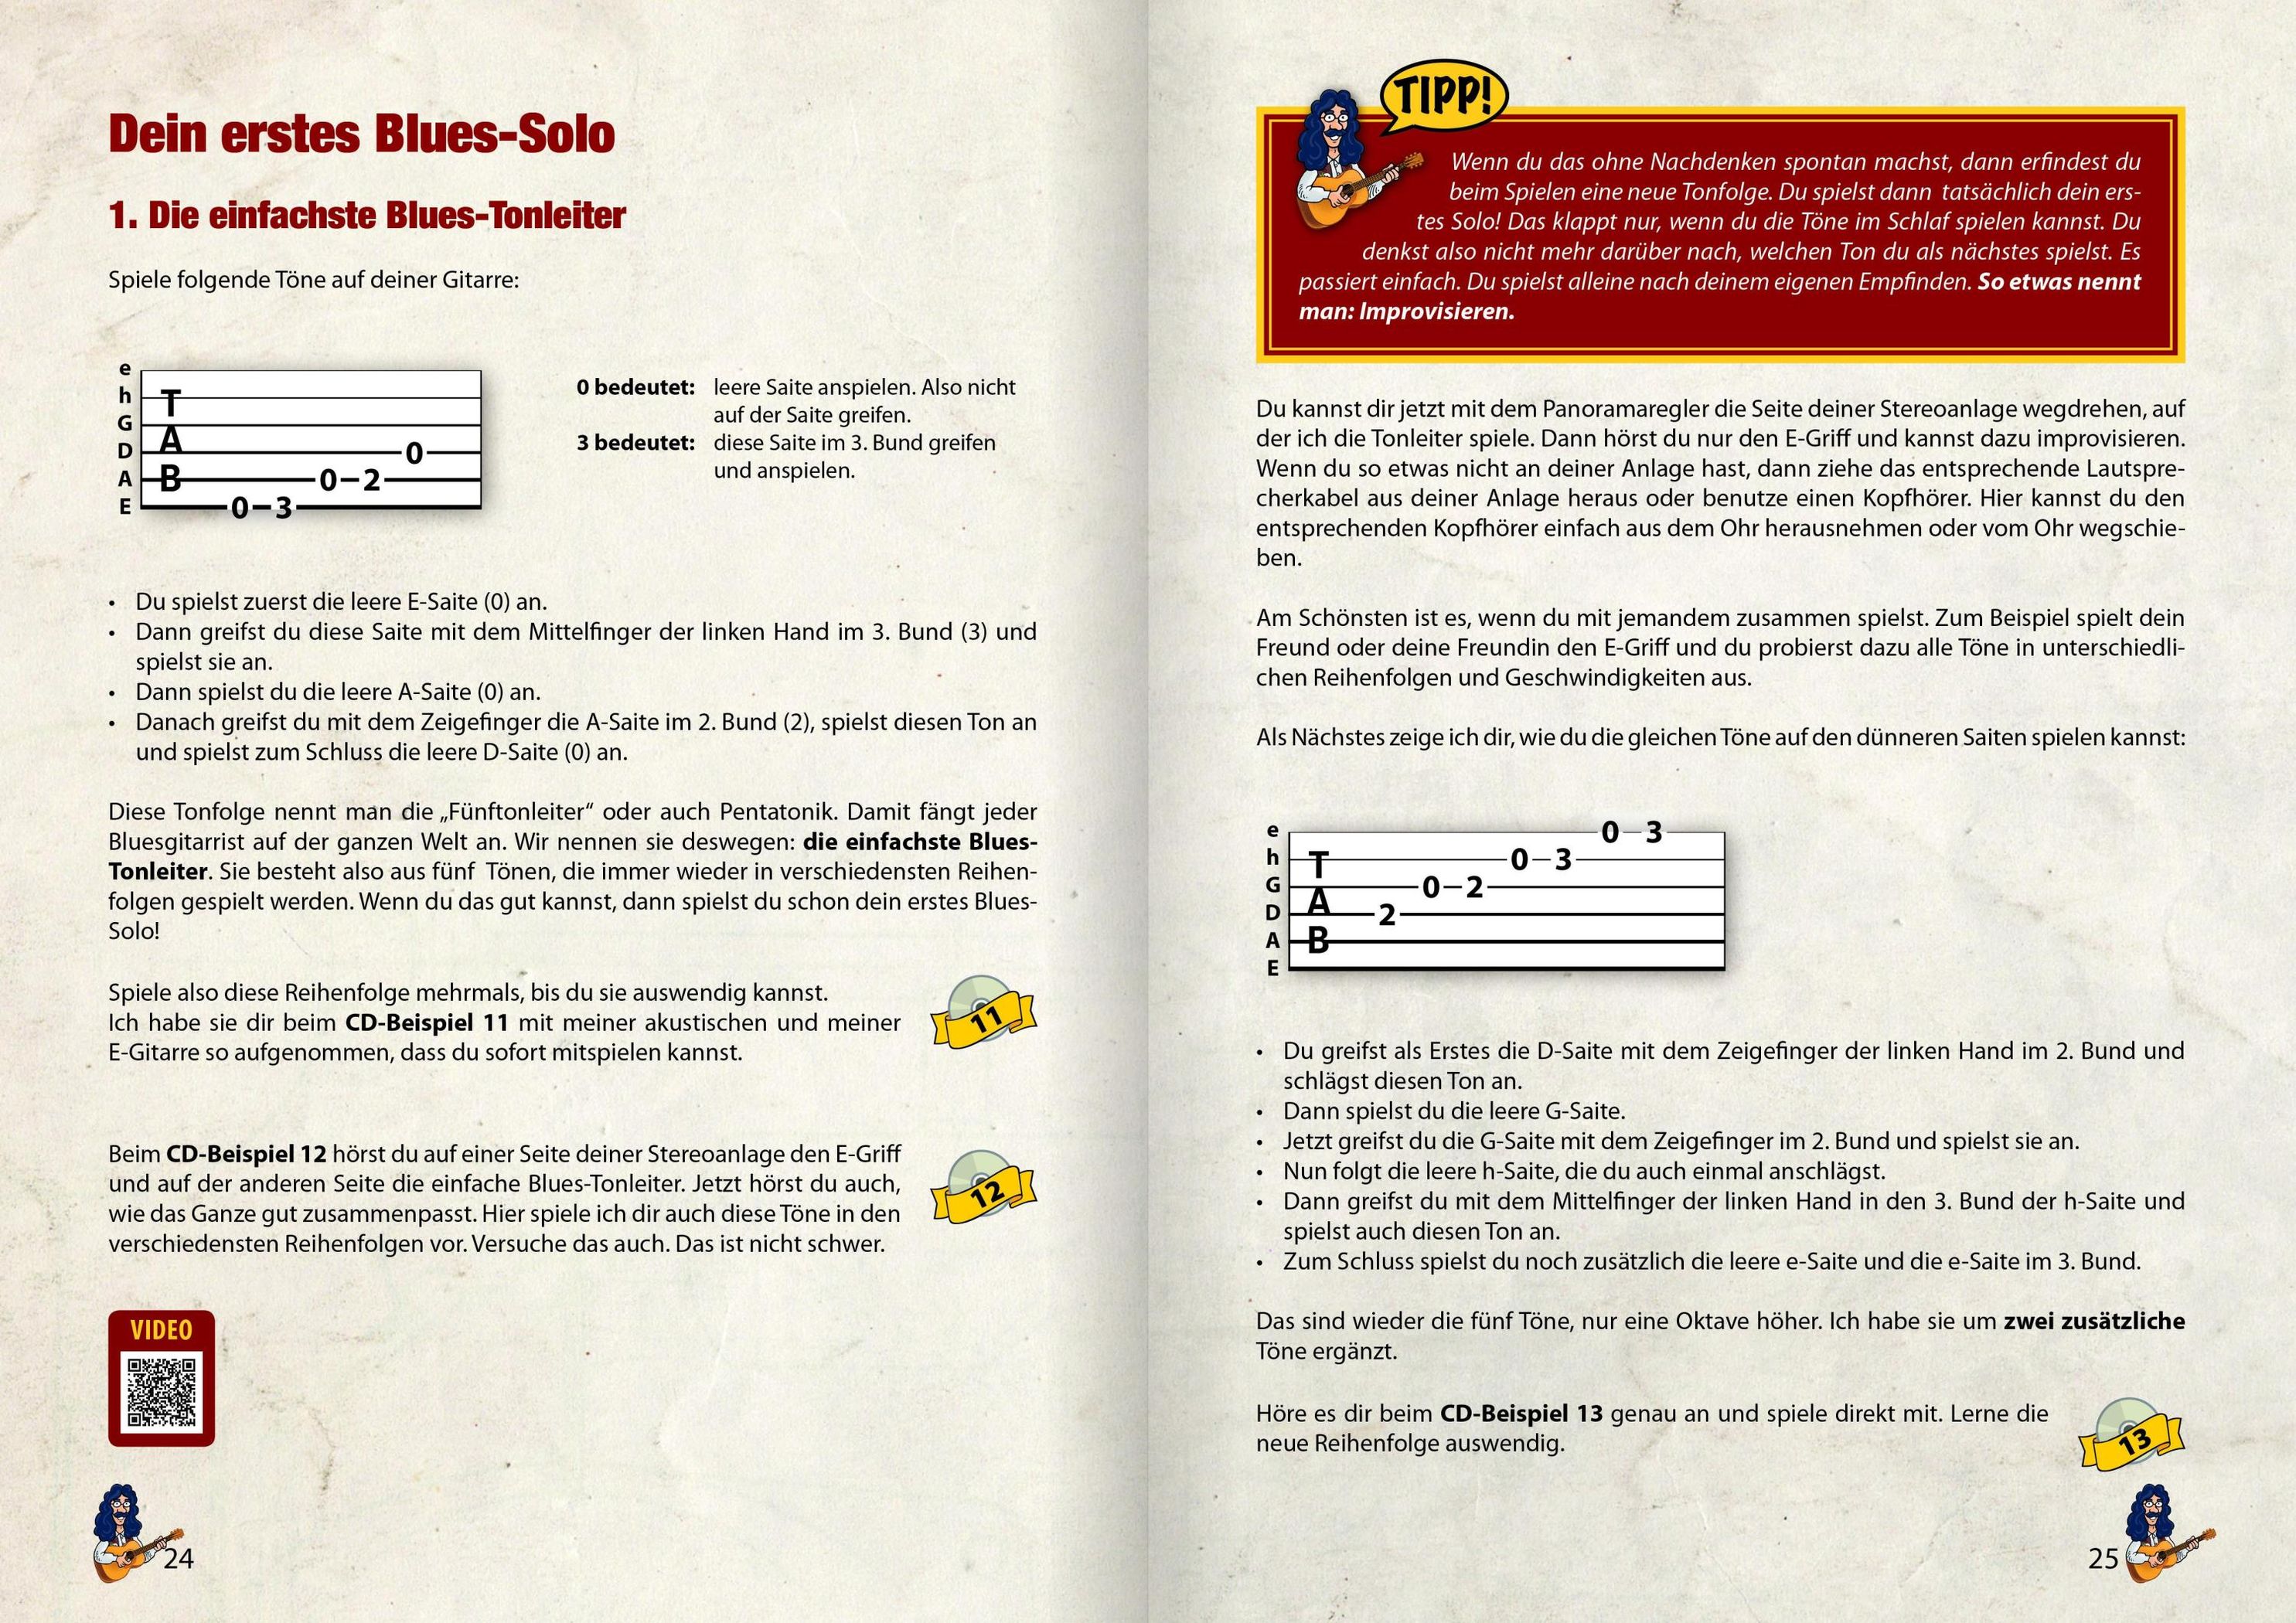 Peter Bursch's Blues-Gitarrenbuch, m. 1 Audio-CD, m. 1 Beilage | Weltbild.ch